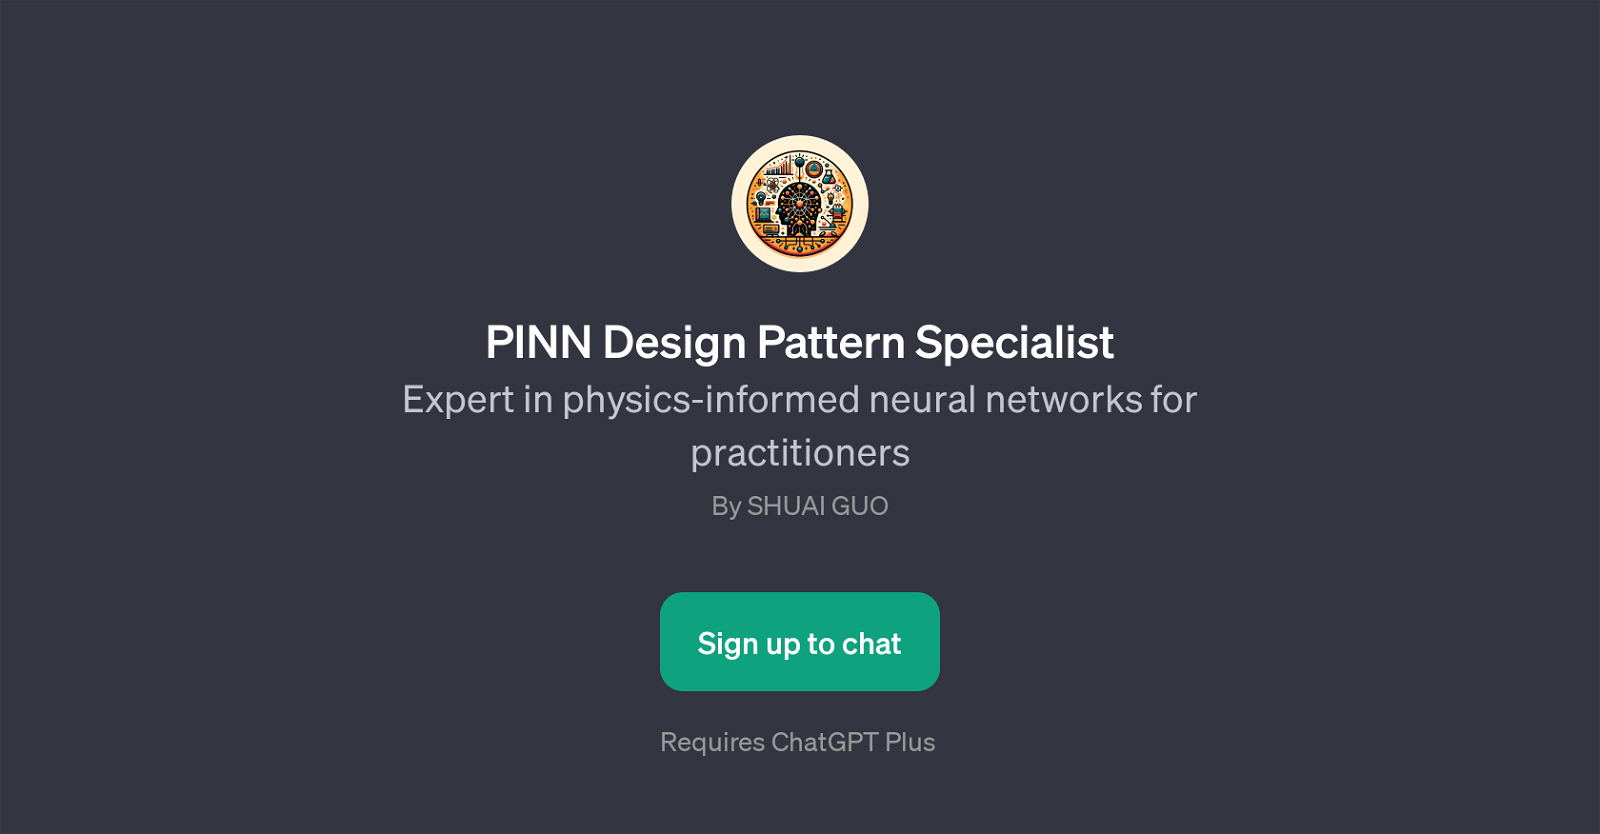 PINN Design Pattern Specialist website